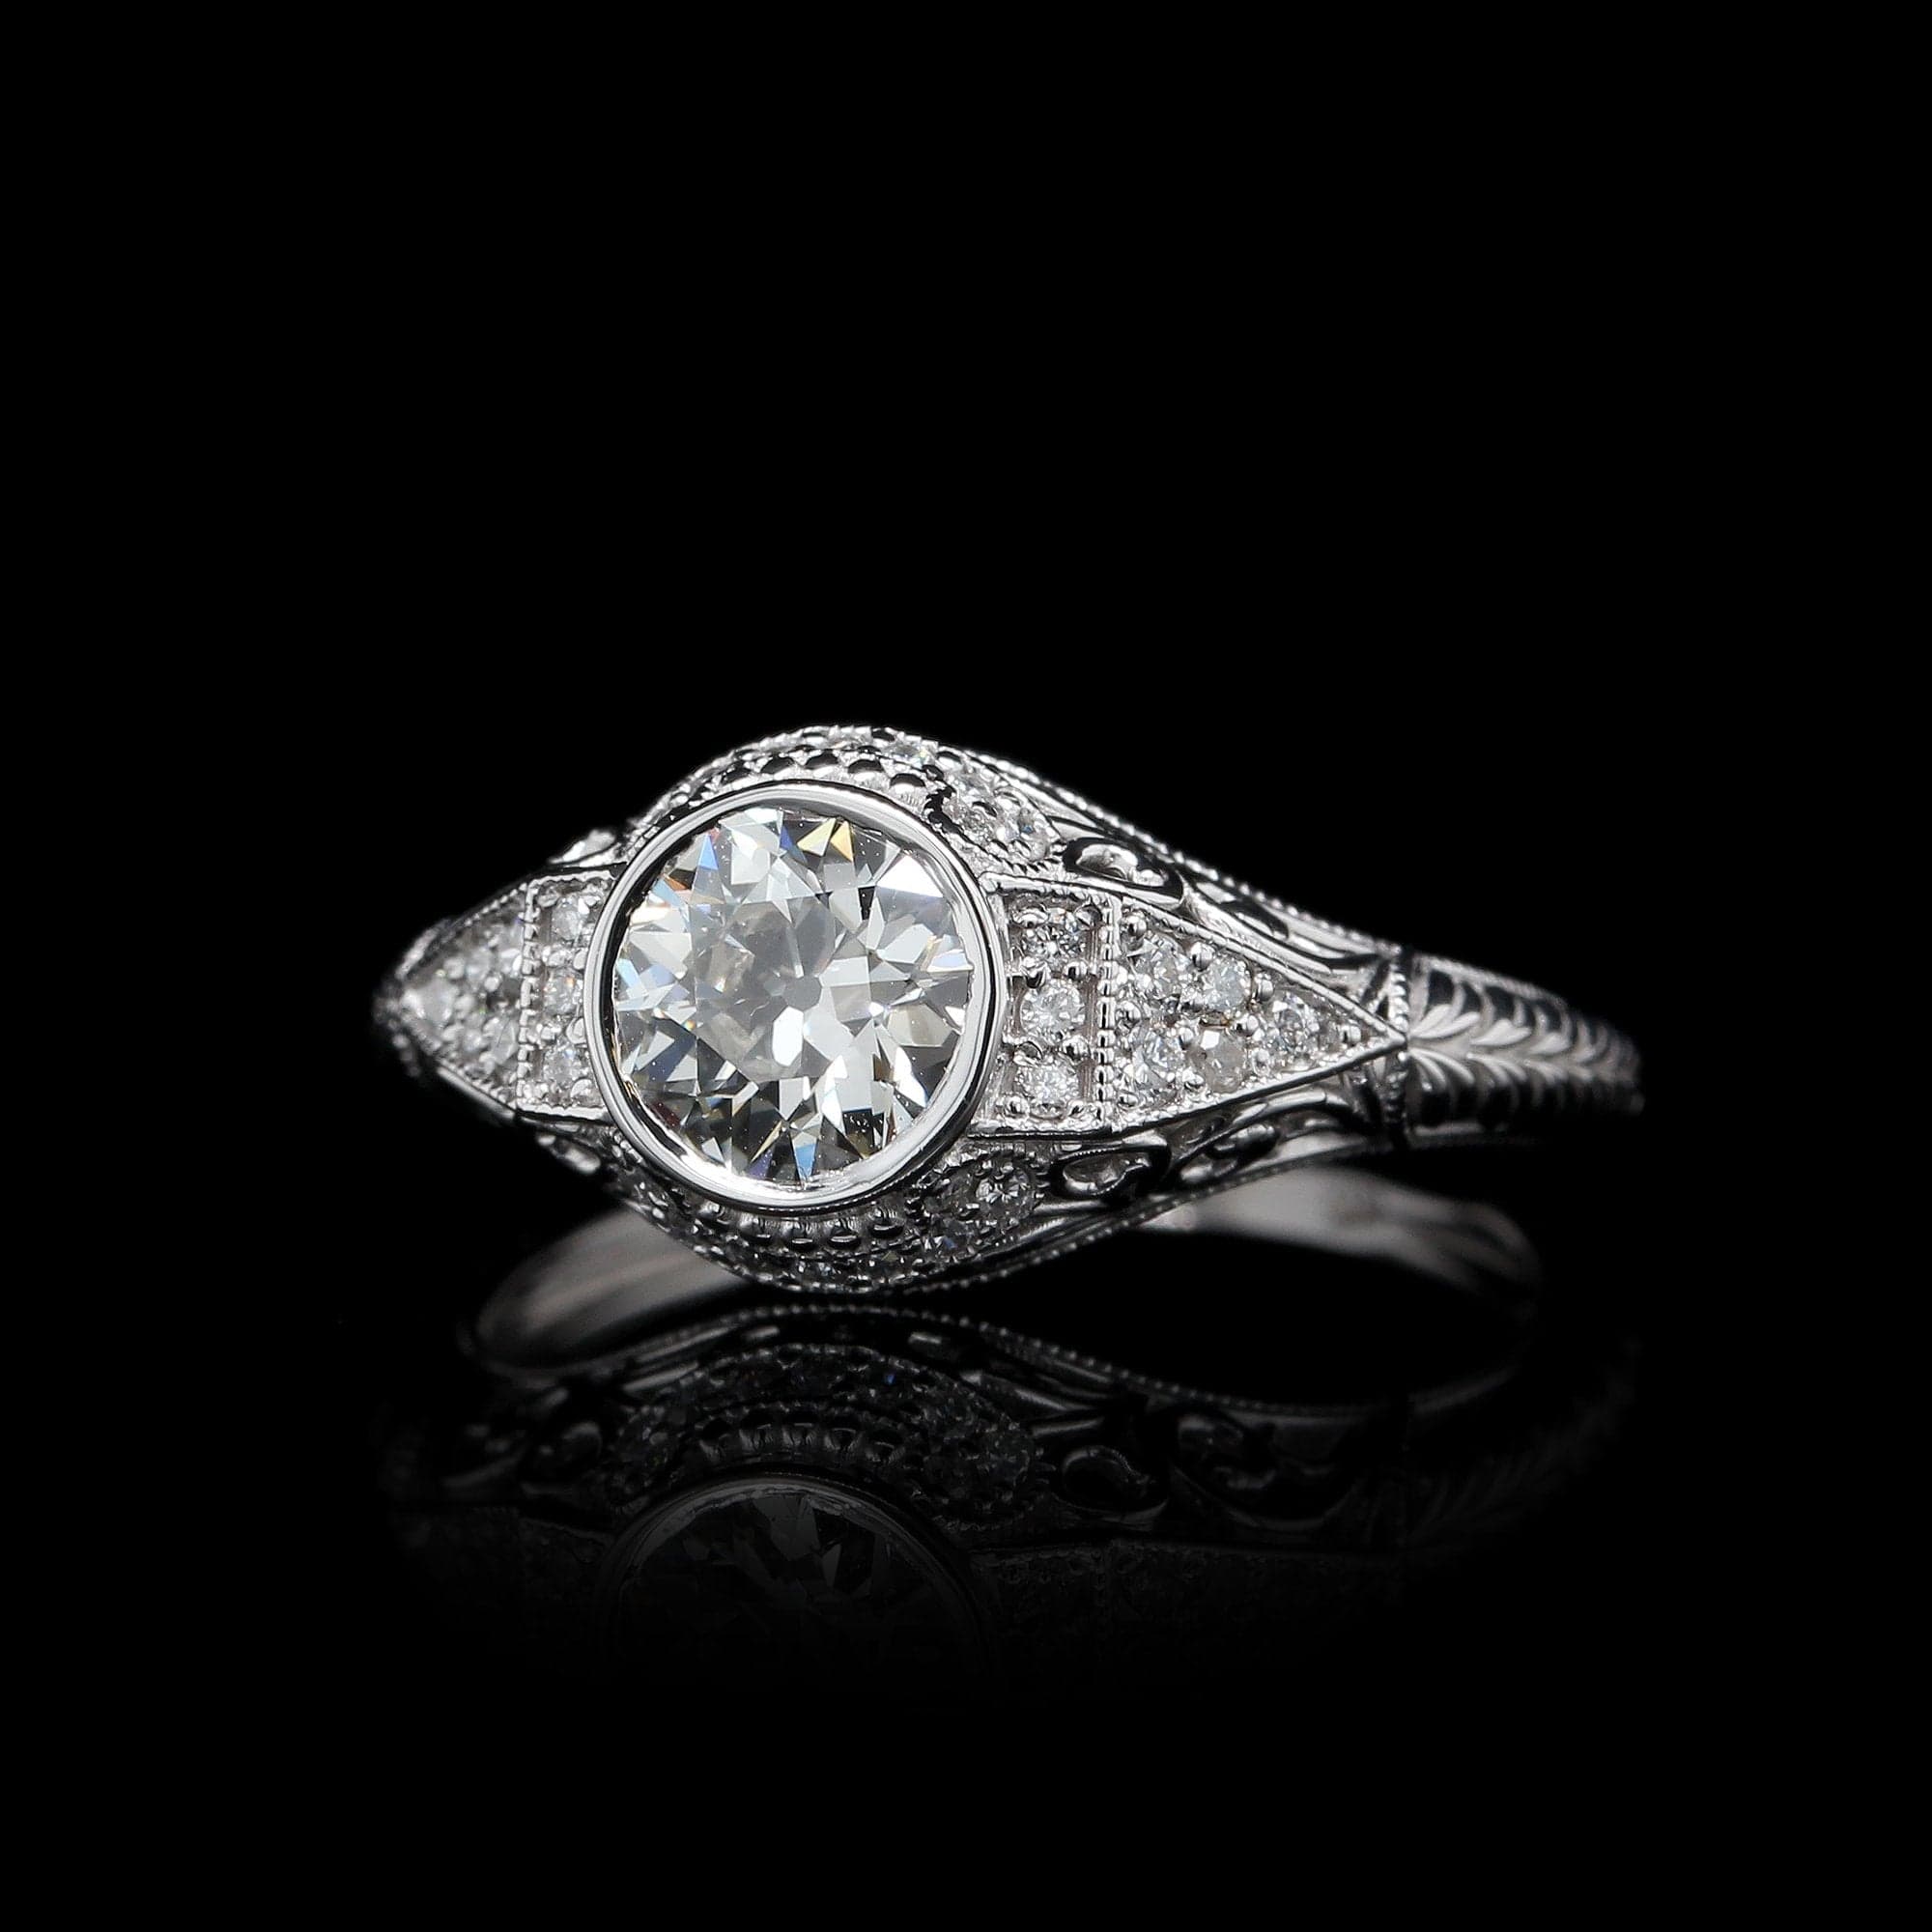 Vintage 14K White Gold Diamond Ring